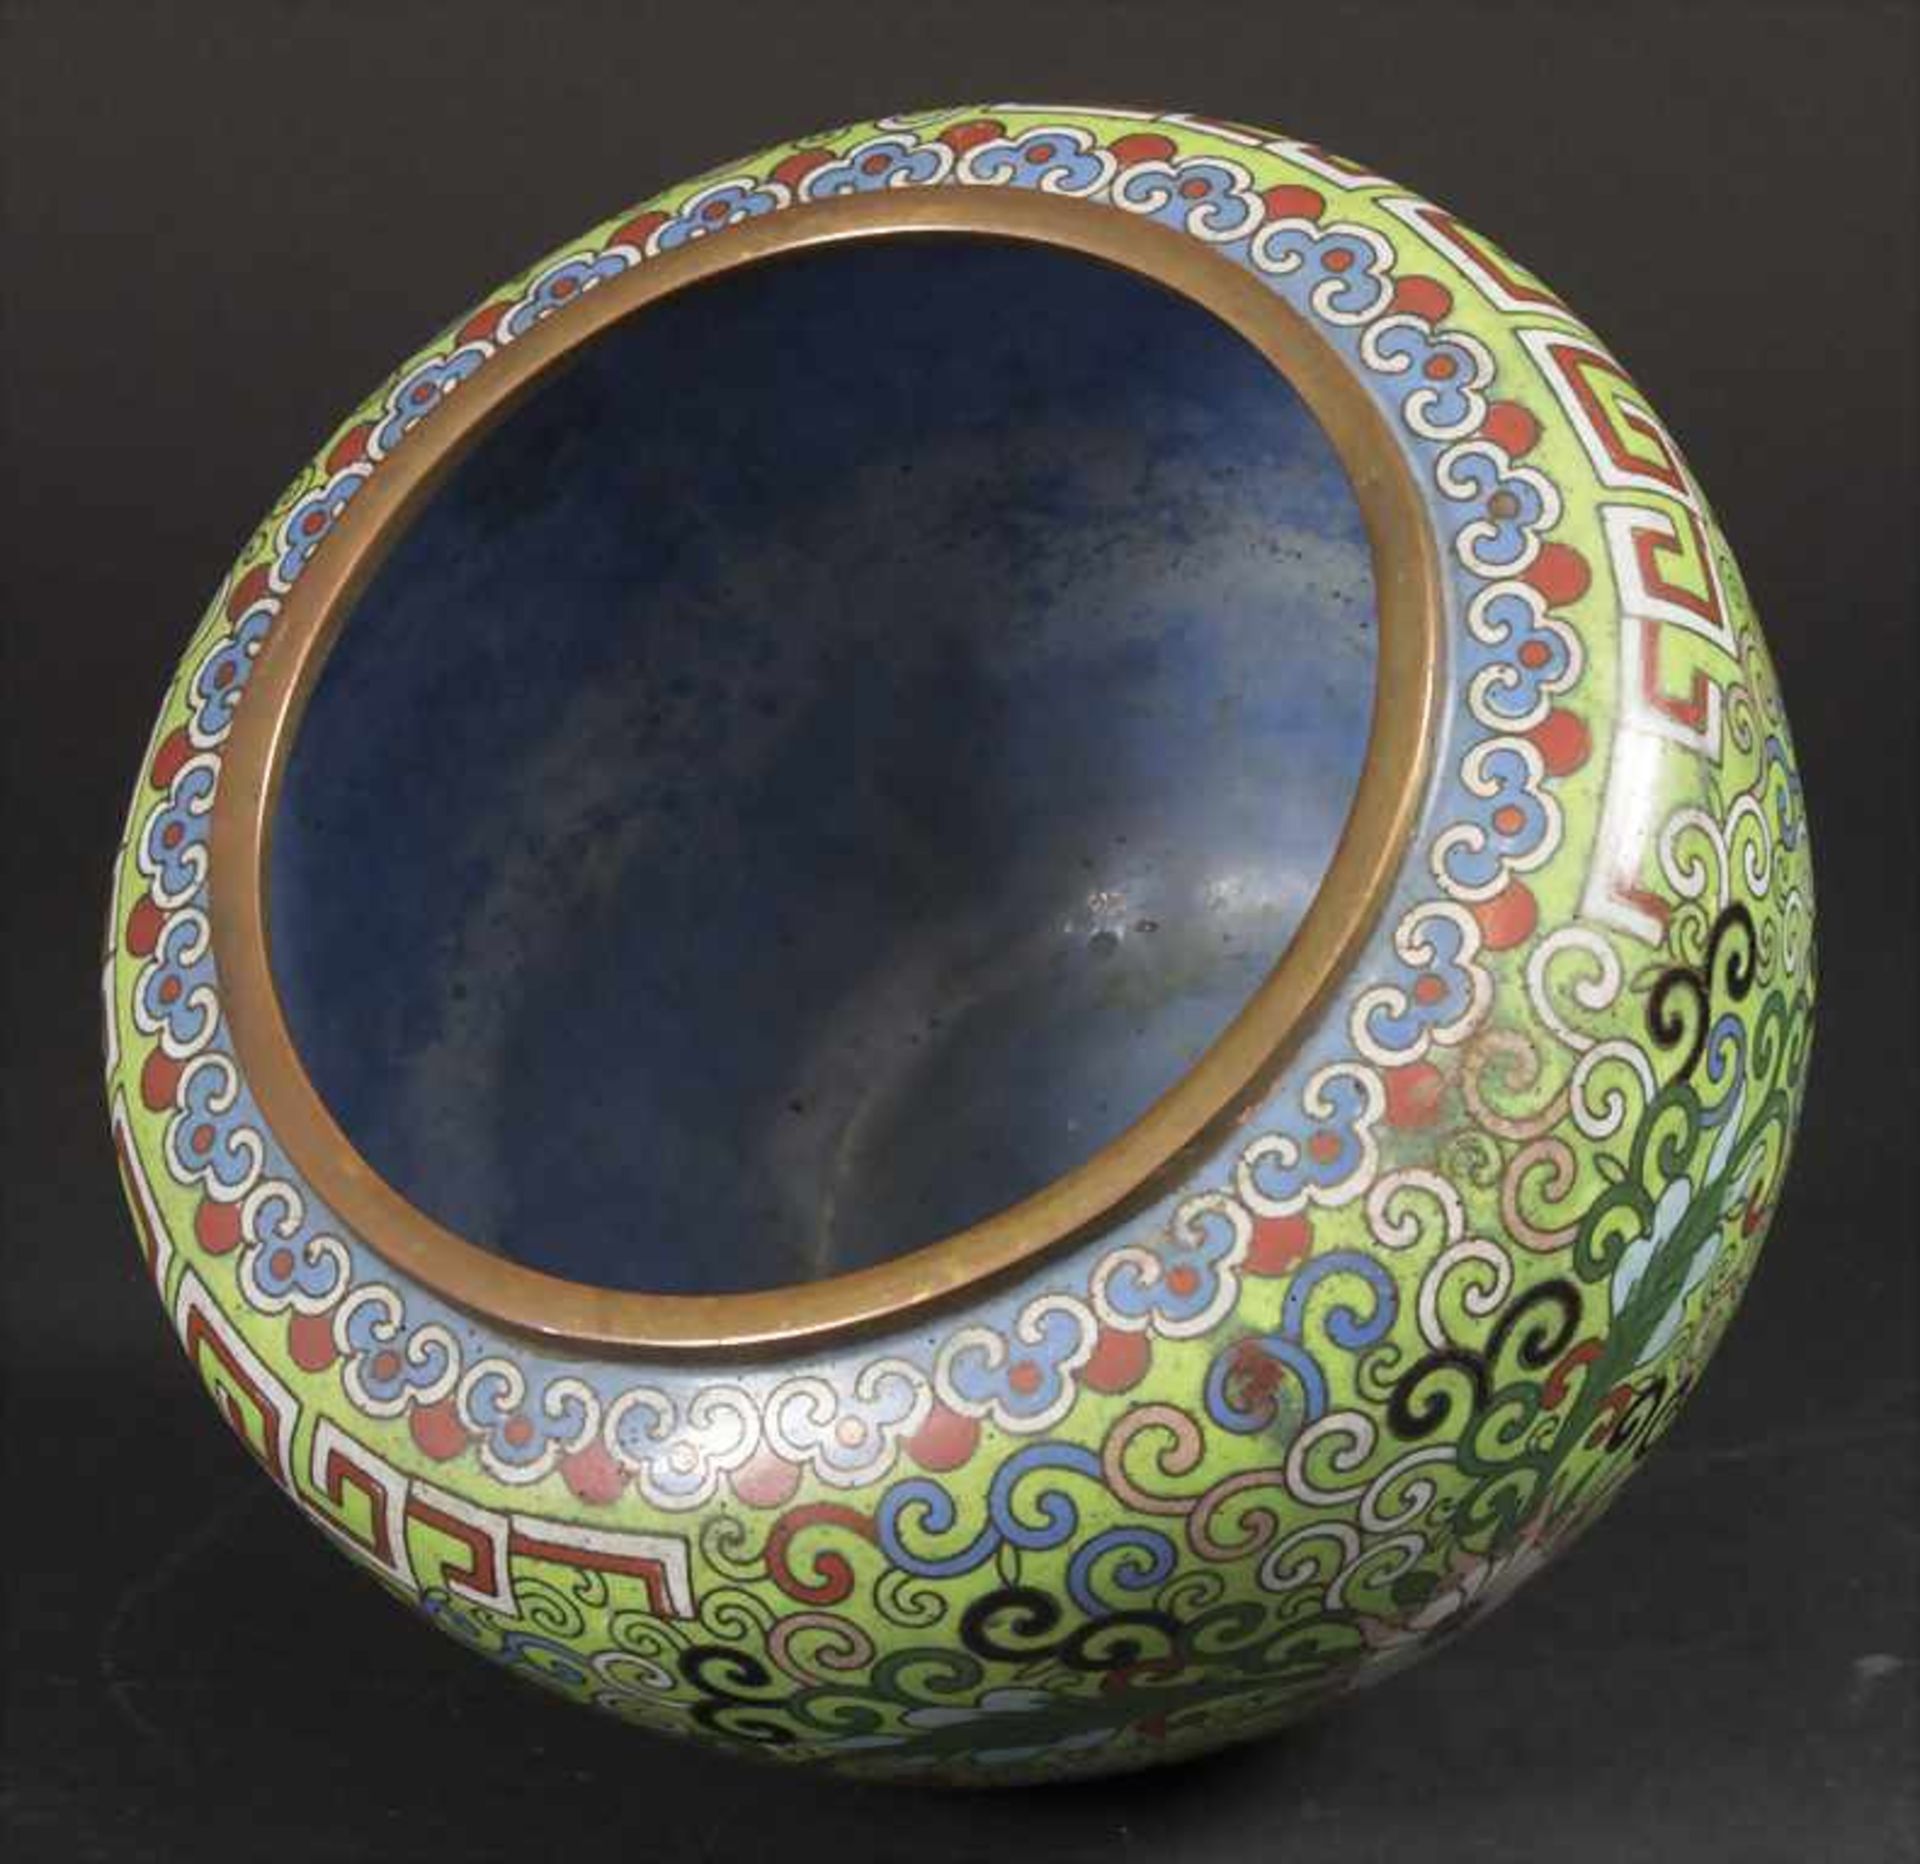 Cloisonné-Ziervase / An enamelled decorative vase, China, Qing-Dynastie (1644-1911), 19. Jh. - Image 5 of 7